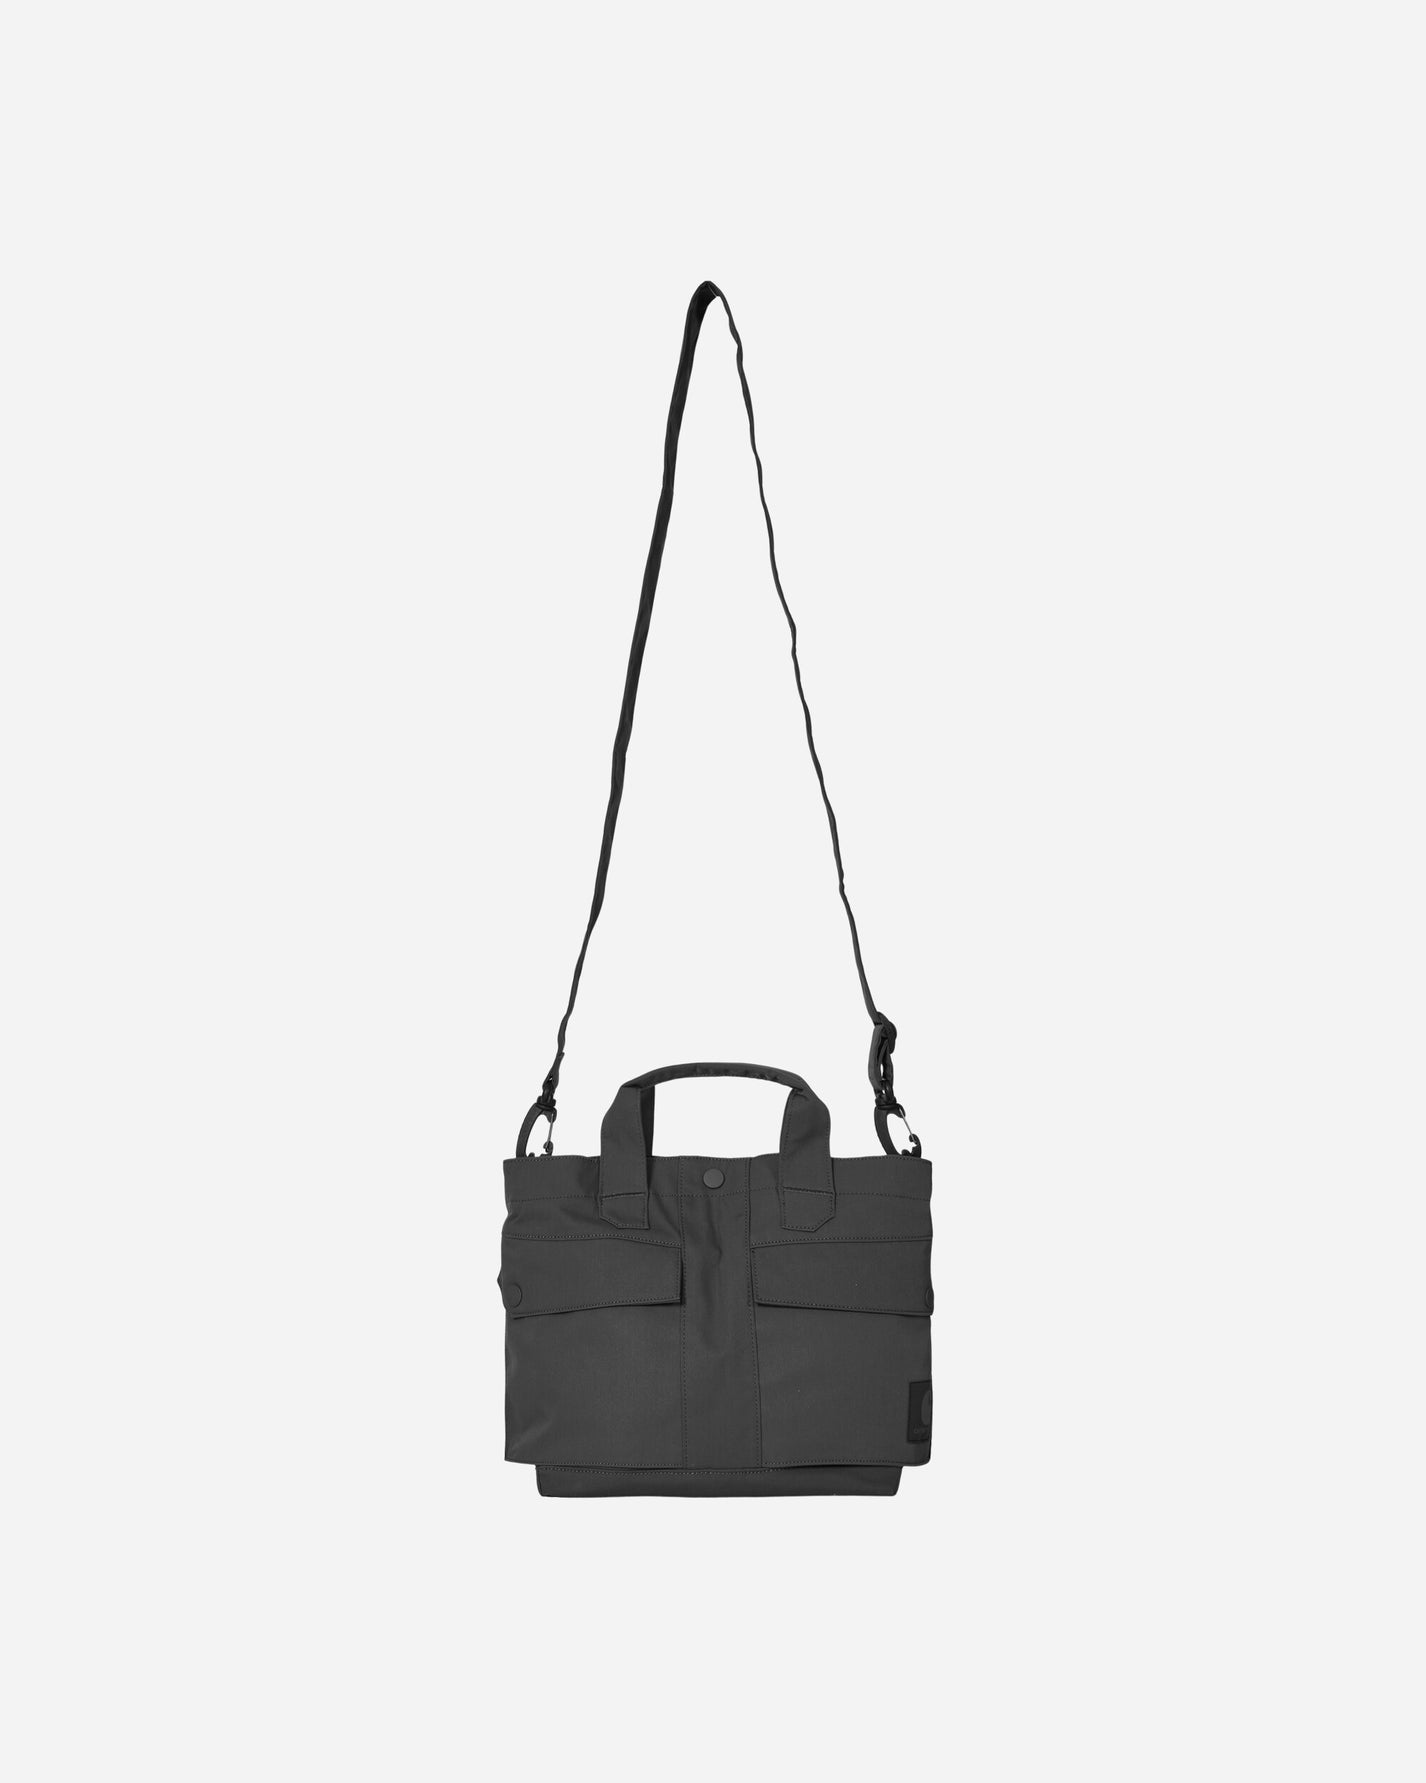 Carhartt WIP Balto Bag Graphite Bags and Backpacks Shoulder Bags I033632 87XX